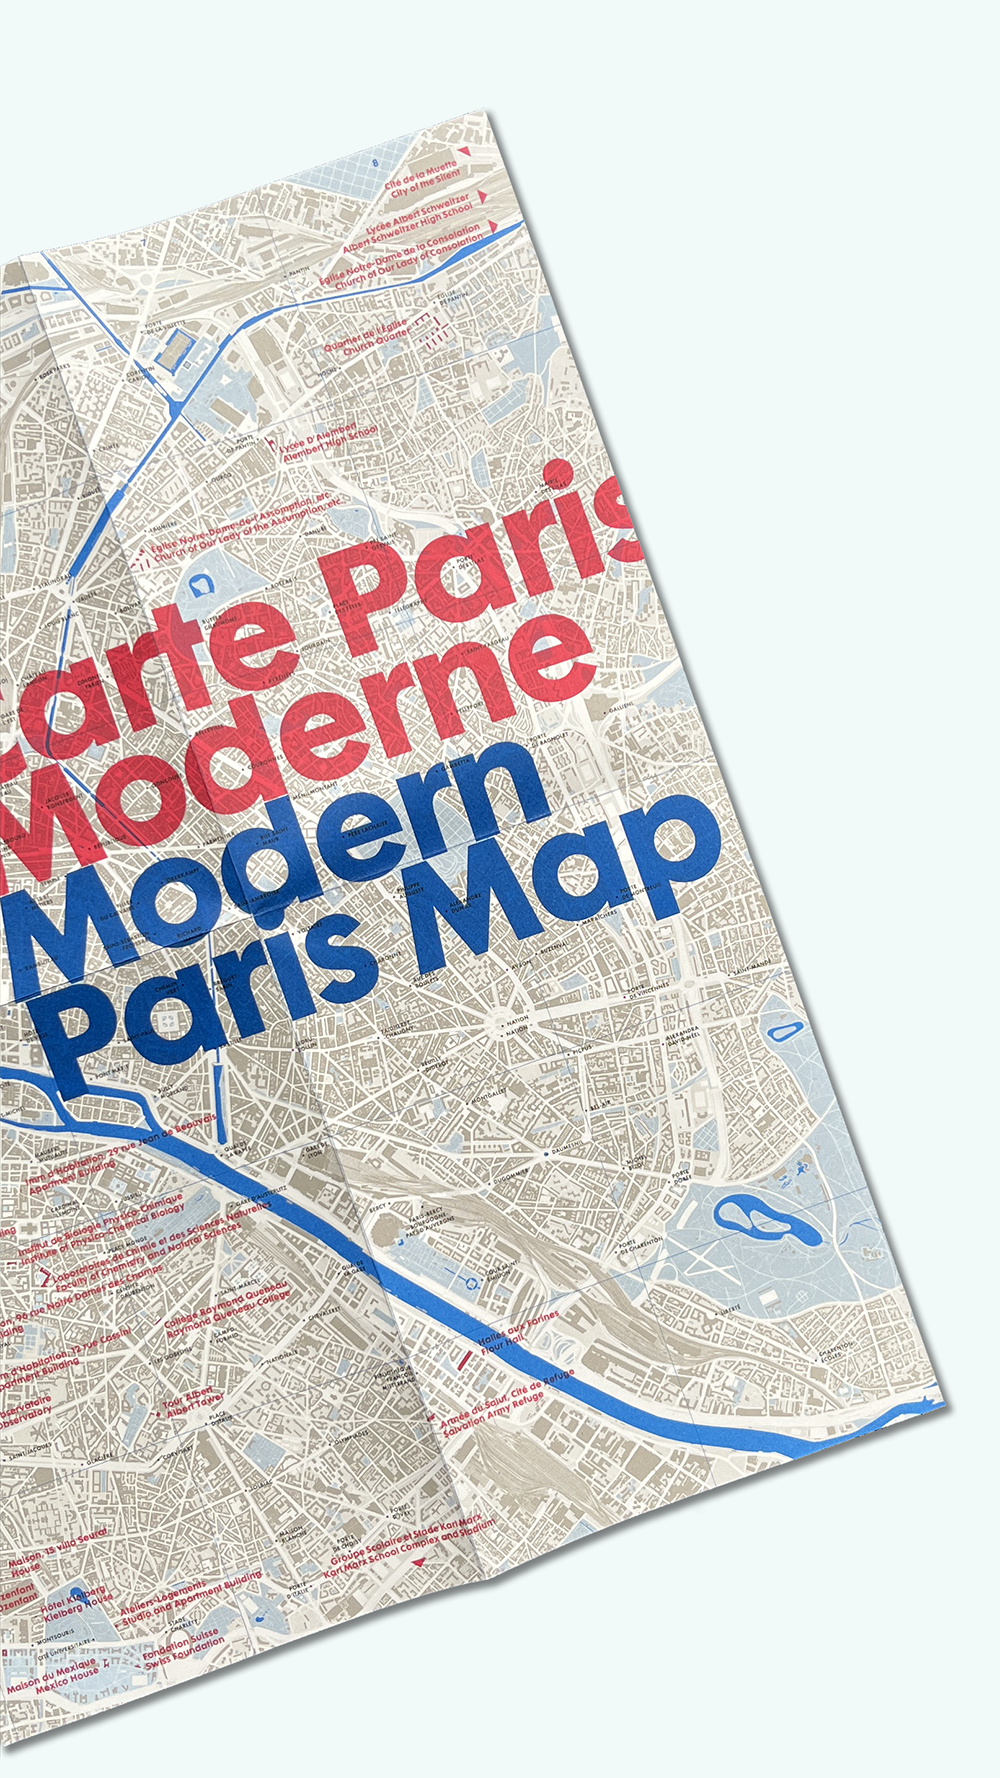 Modern Paris Map / Carte Paris Moderne